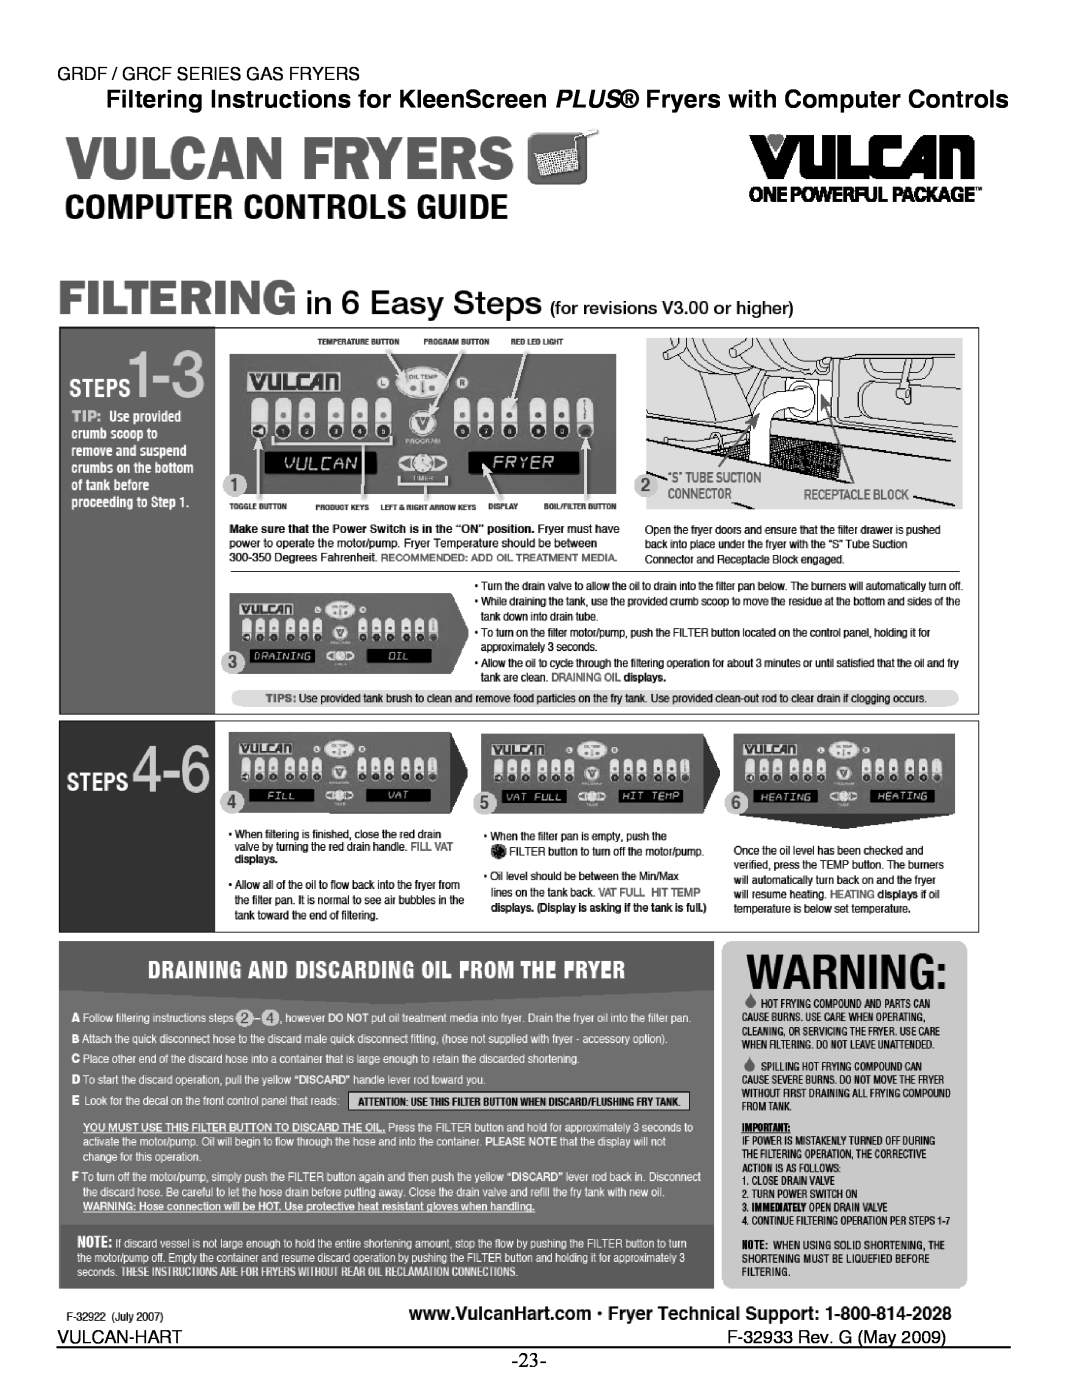 Vulcan-Hart 1GR45D ML-136411, 3GR45DF ML-136427 manual Grdf / Grcf Series Gas Fryers, Vulcan-Hart, F-32933 Rev. G May 